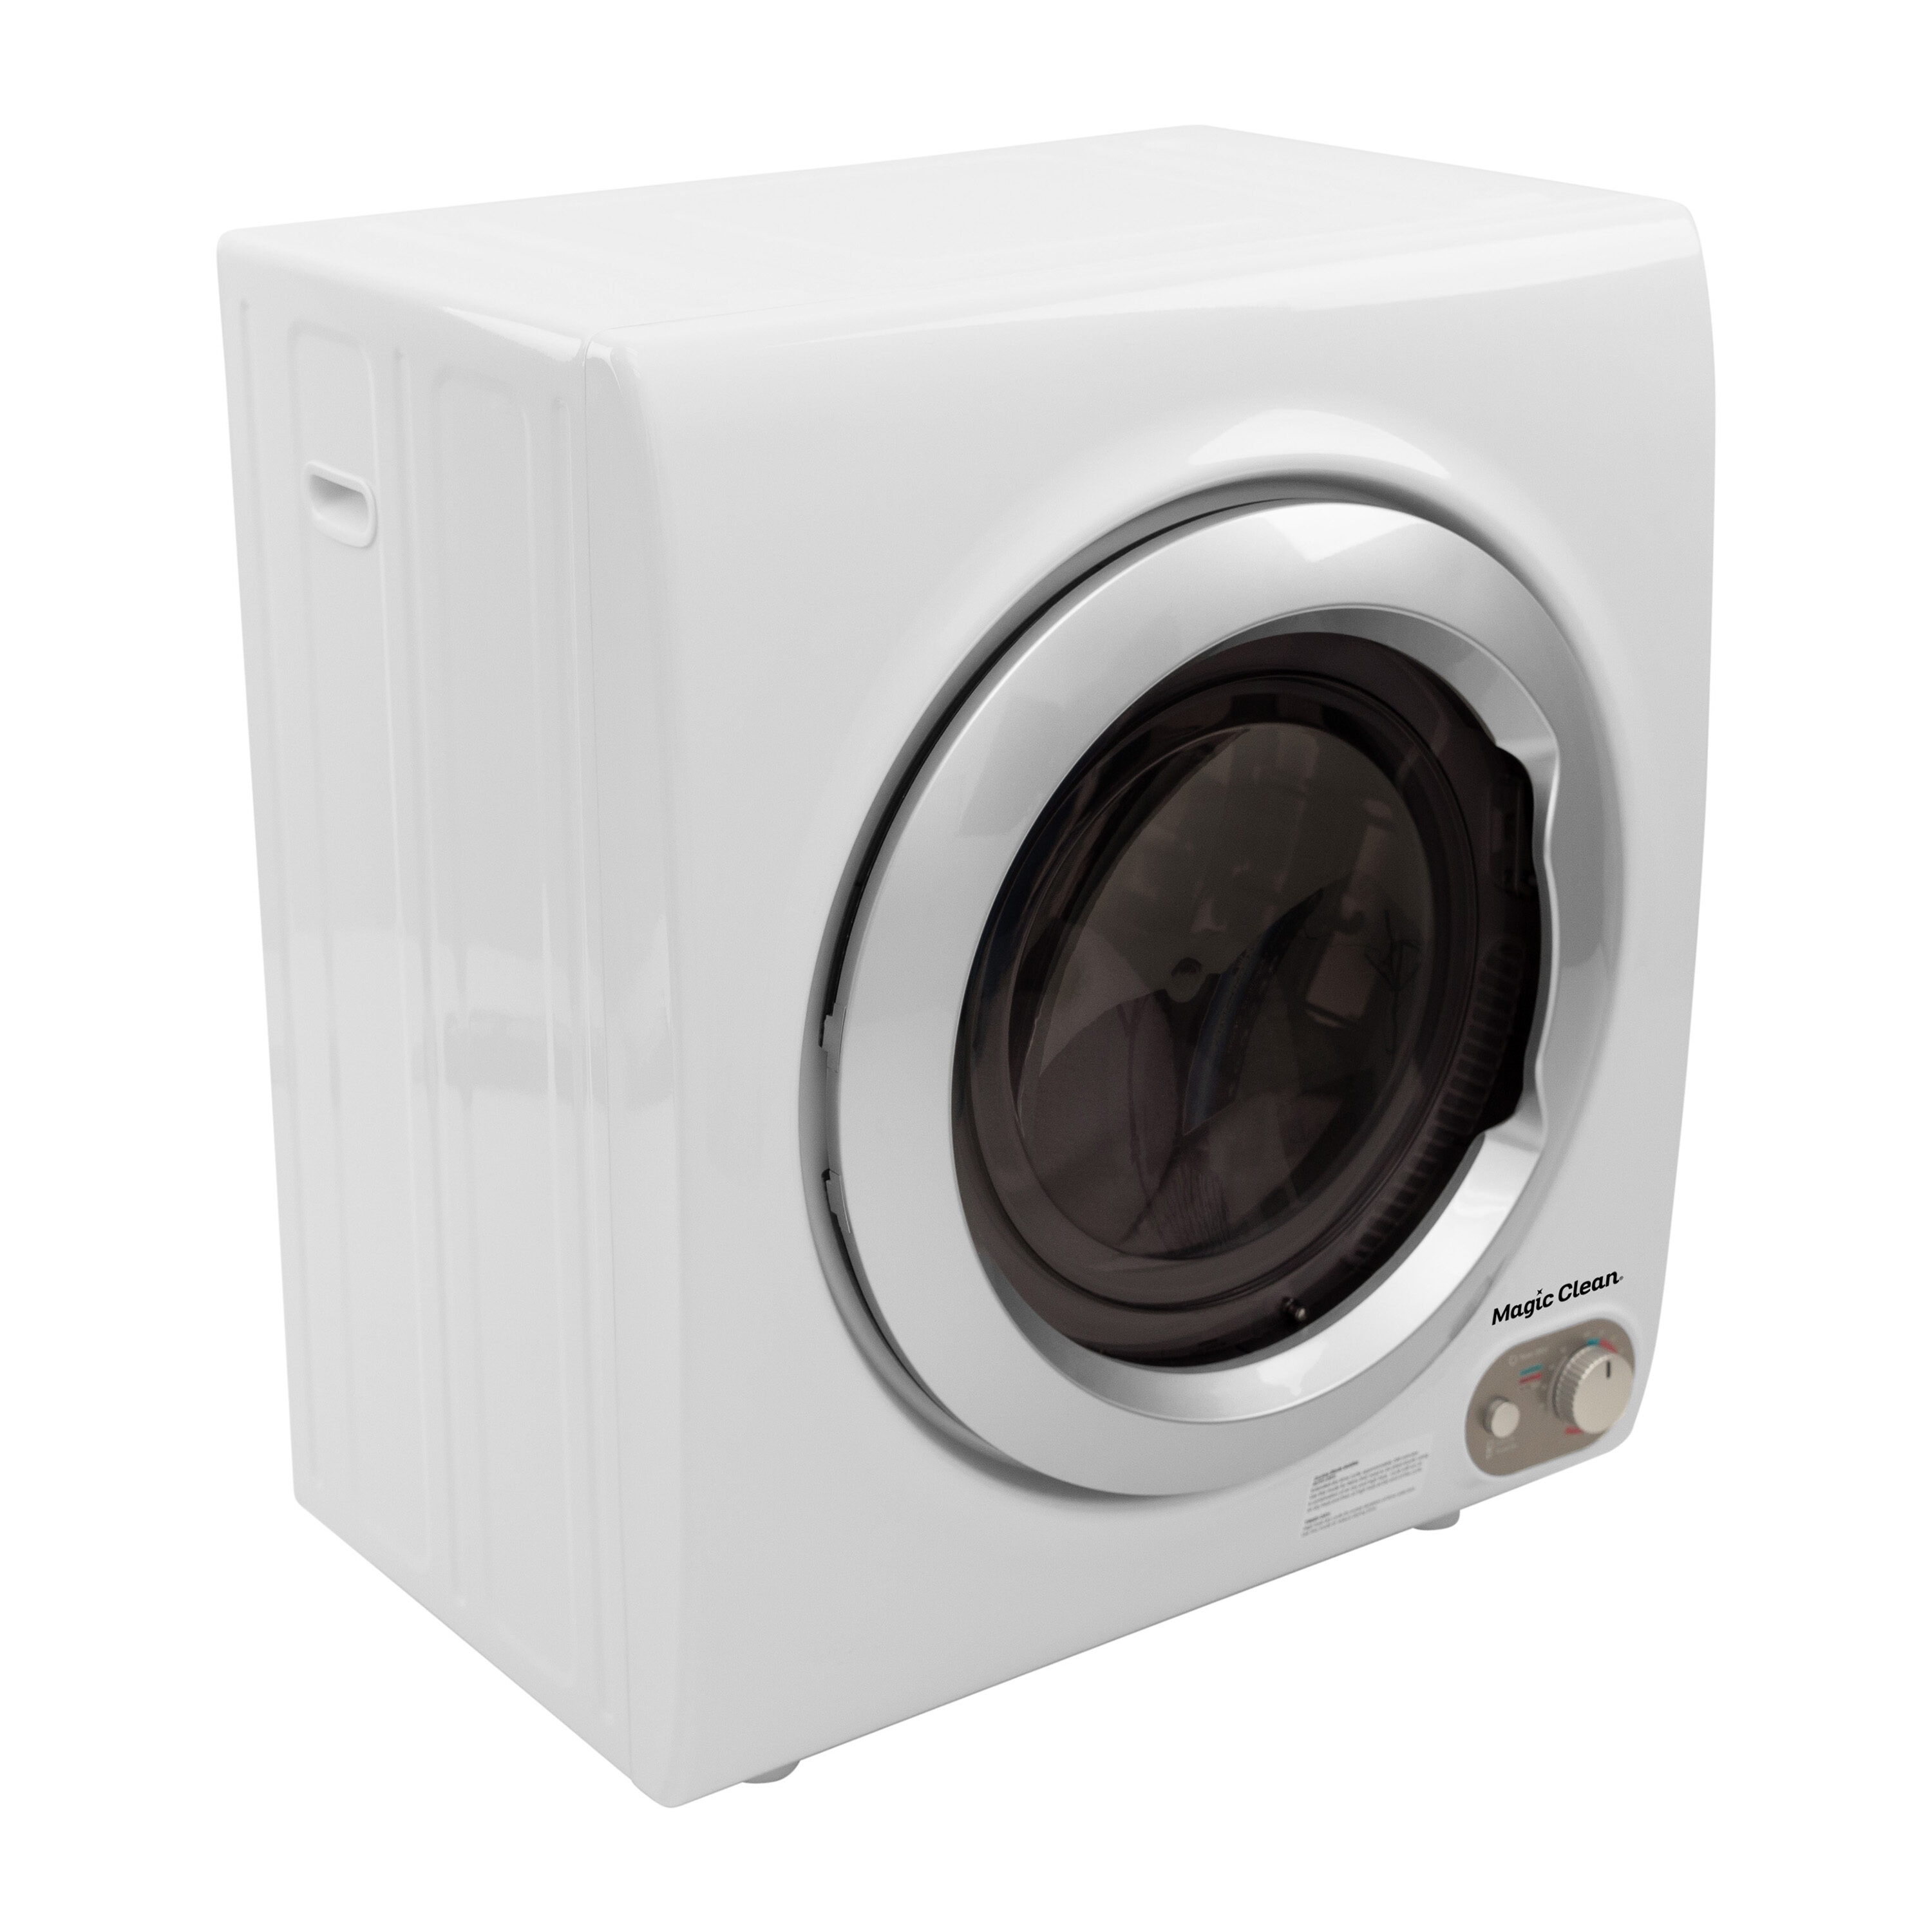 Catálogo de fabricantes de Apartments Size Washer Dryer de alta calidad y  Apartments Size Washer Dryer en Alibaba.com